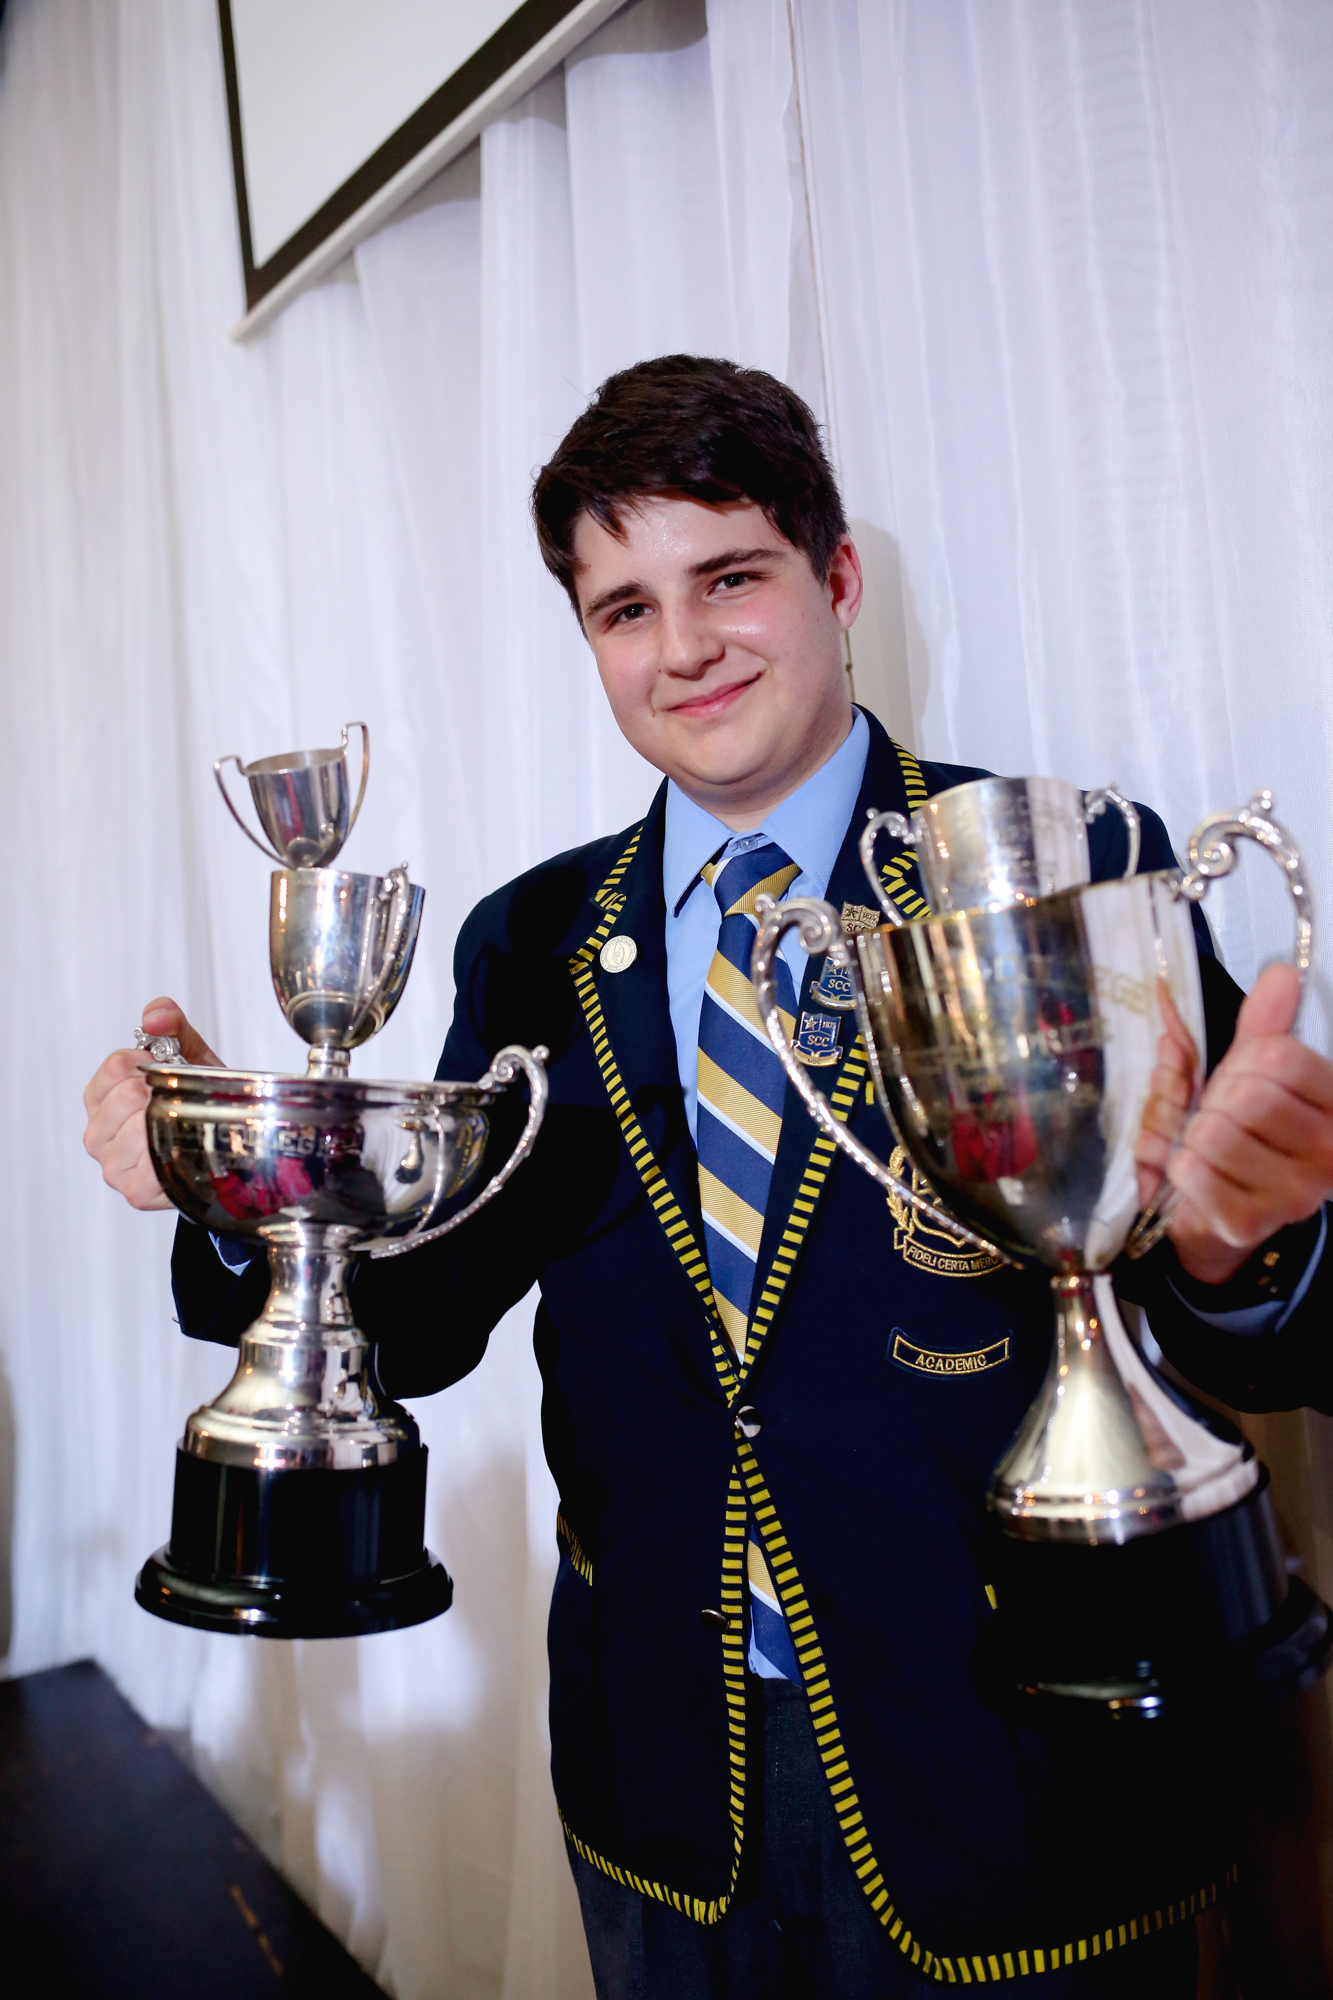 Jason Lazarov with his Top Cambridge Matric Student Awards